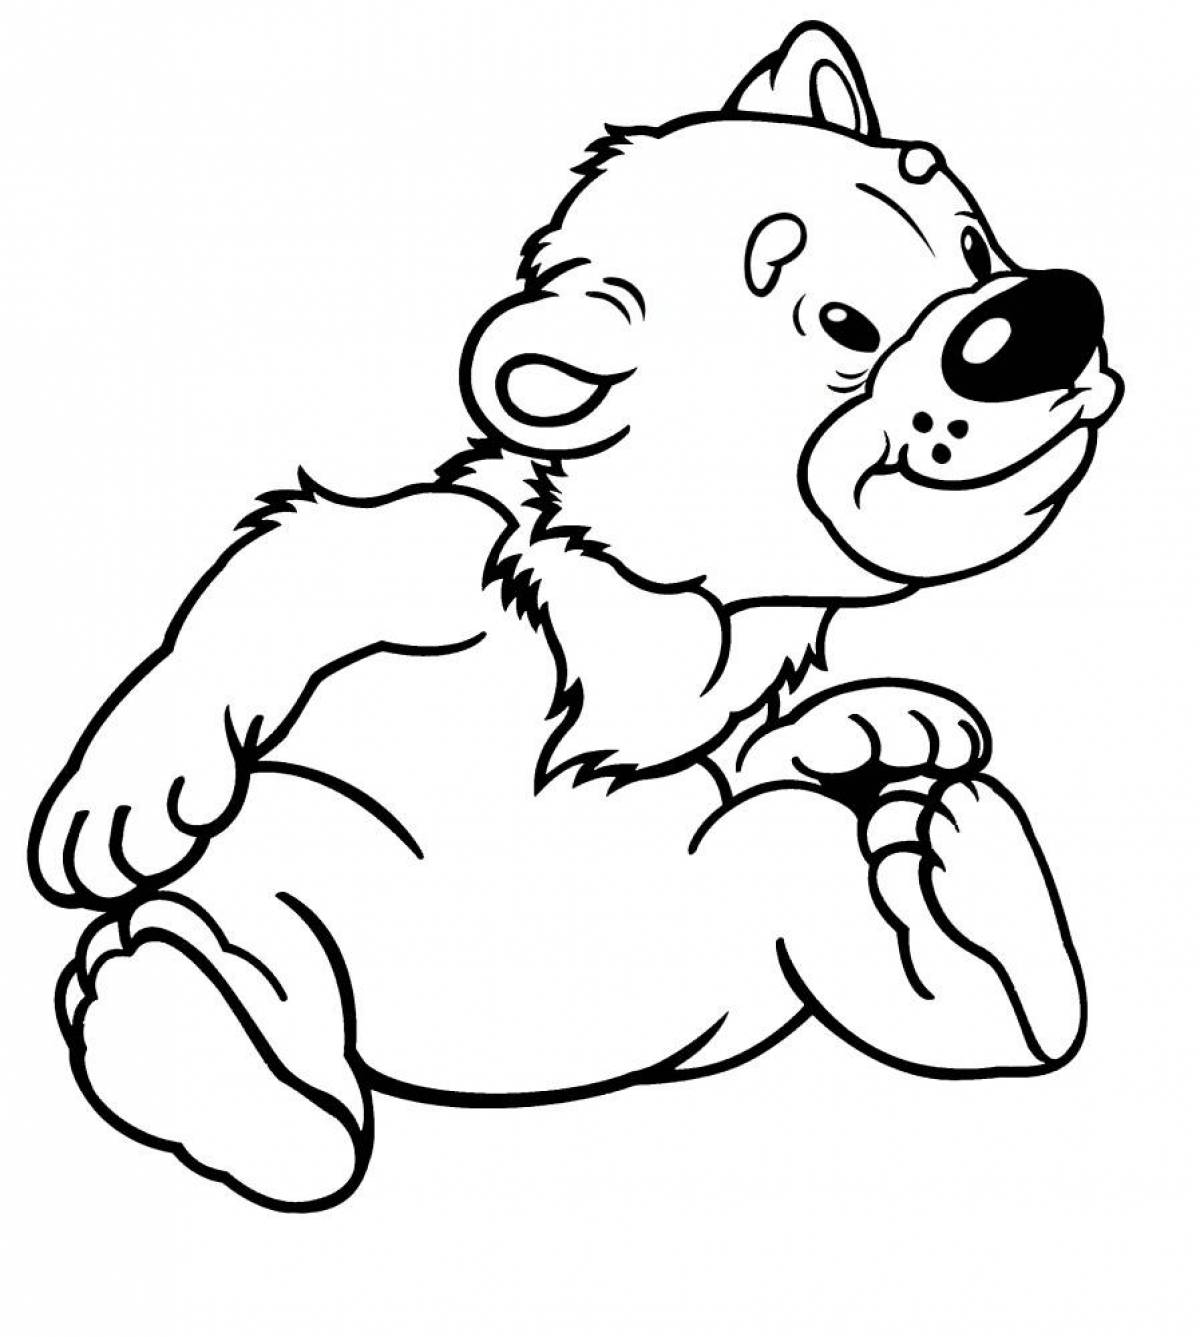 Cute bear coloring for kids